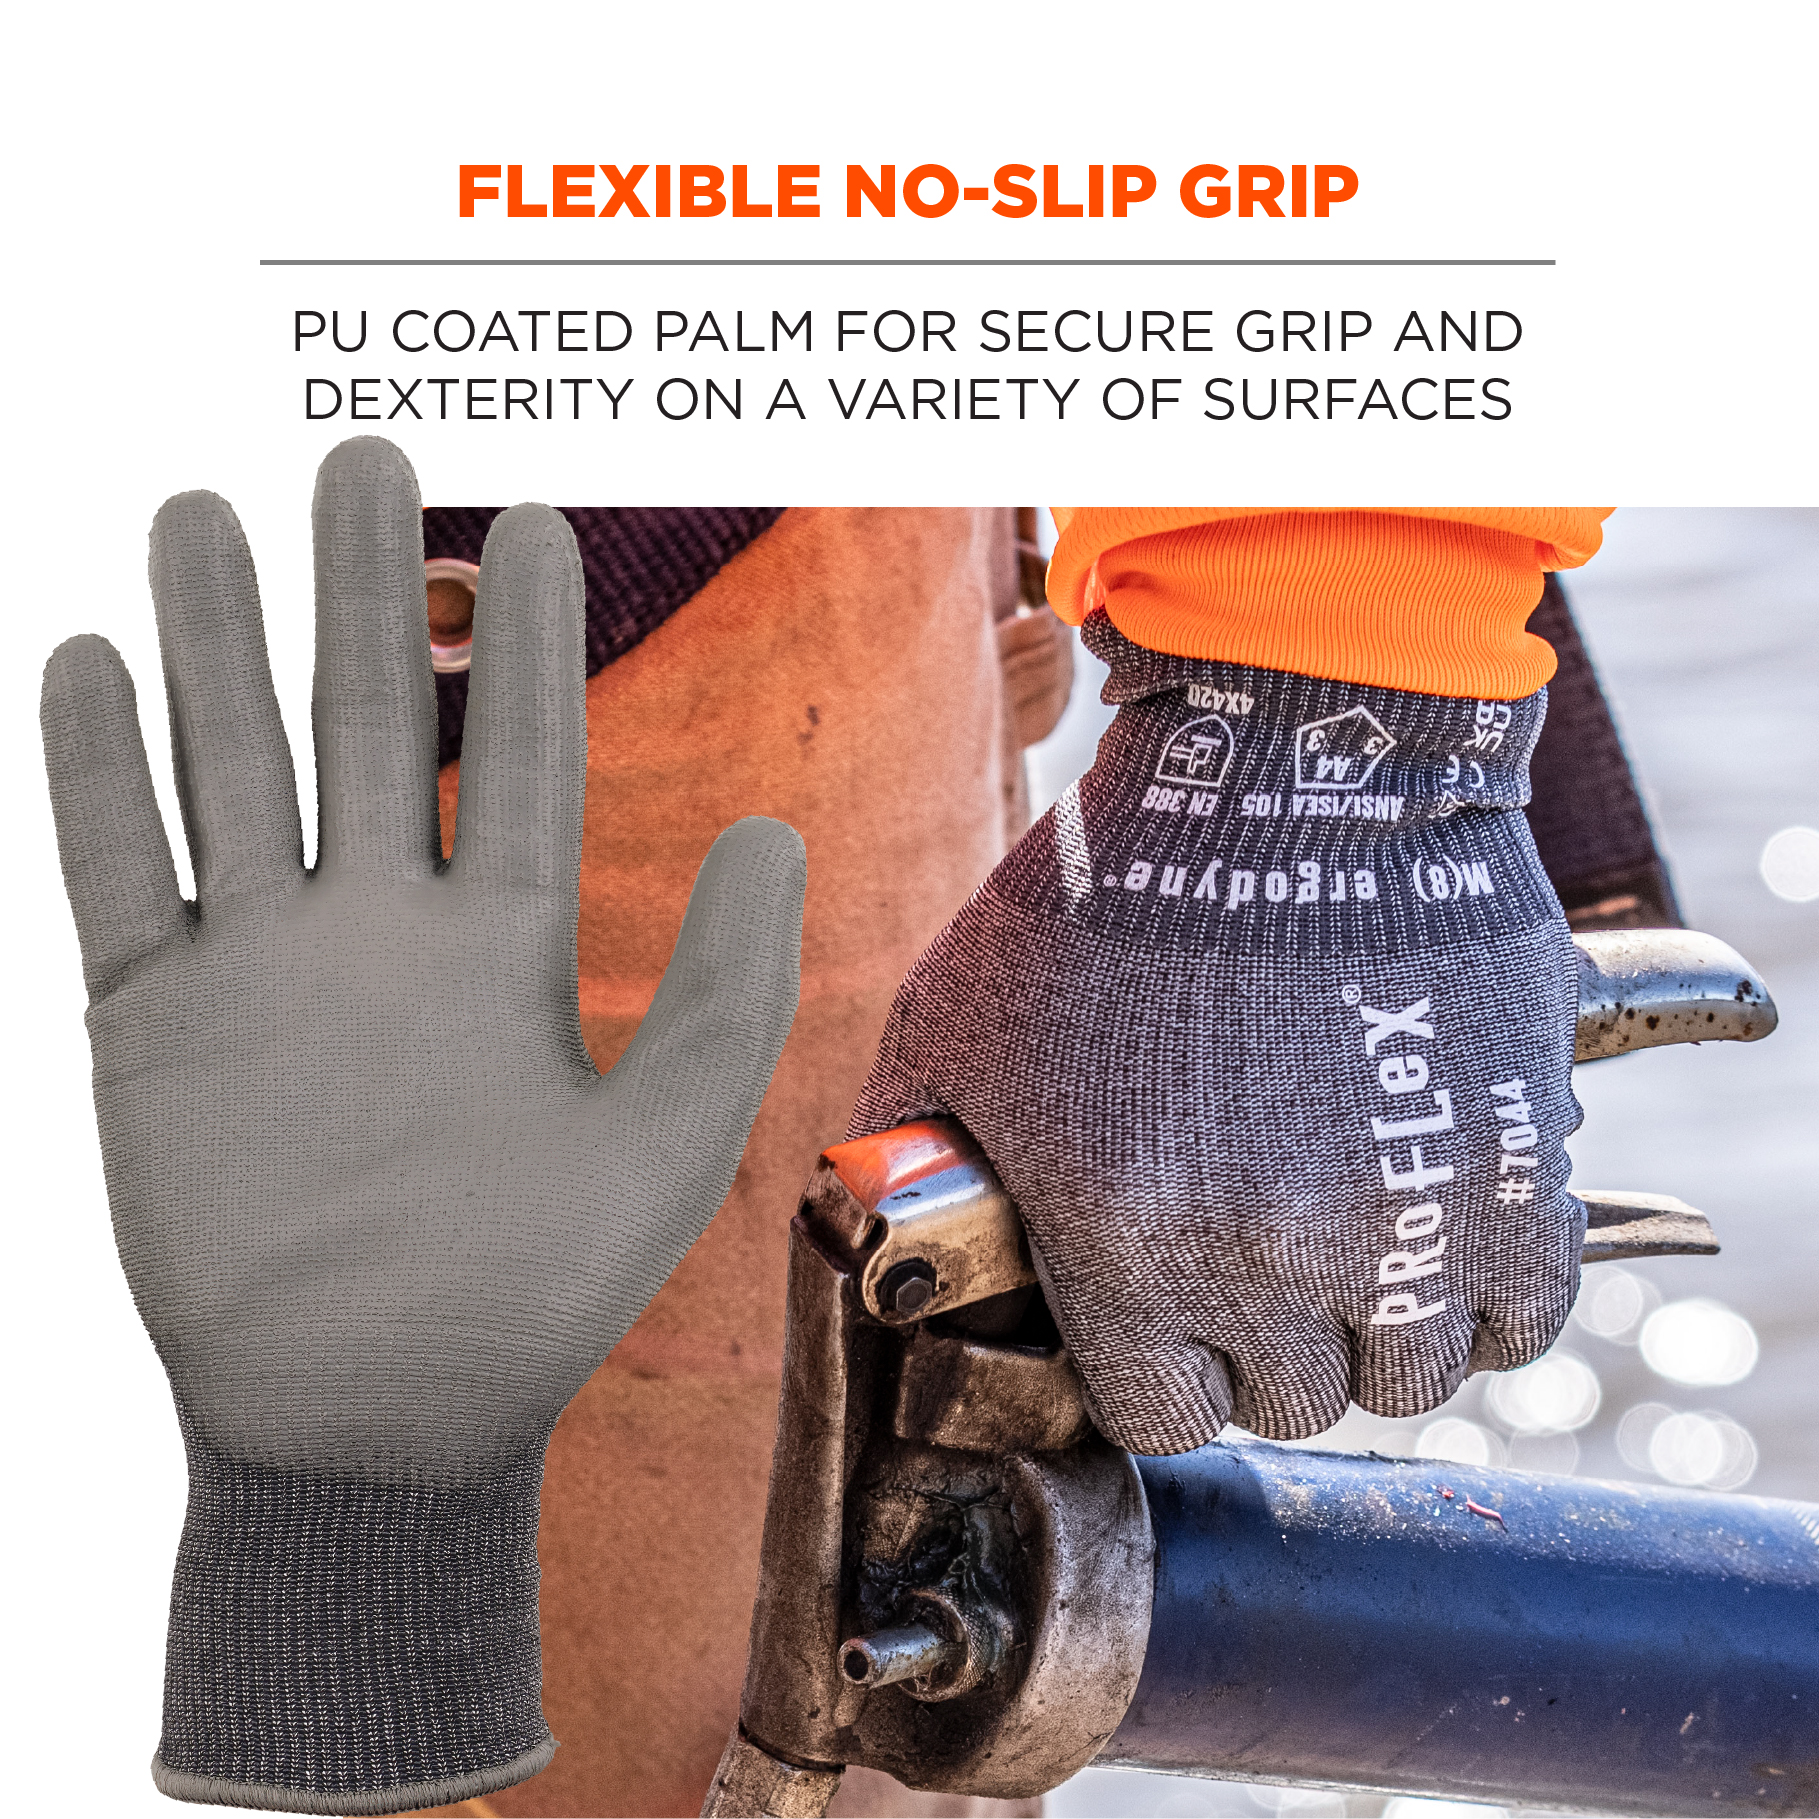 https://www.ergodyne.com/sites/default/files/product-images/10491-7044-ansi-a4-pu-coated-cr-gloves-gray-flexible-no-slip-grip.jpg